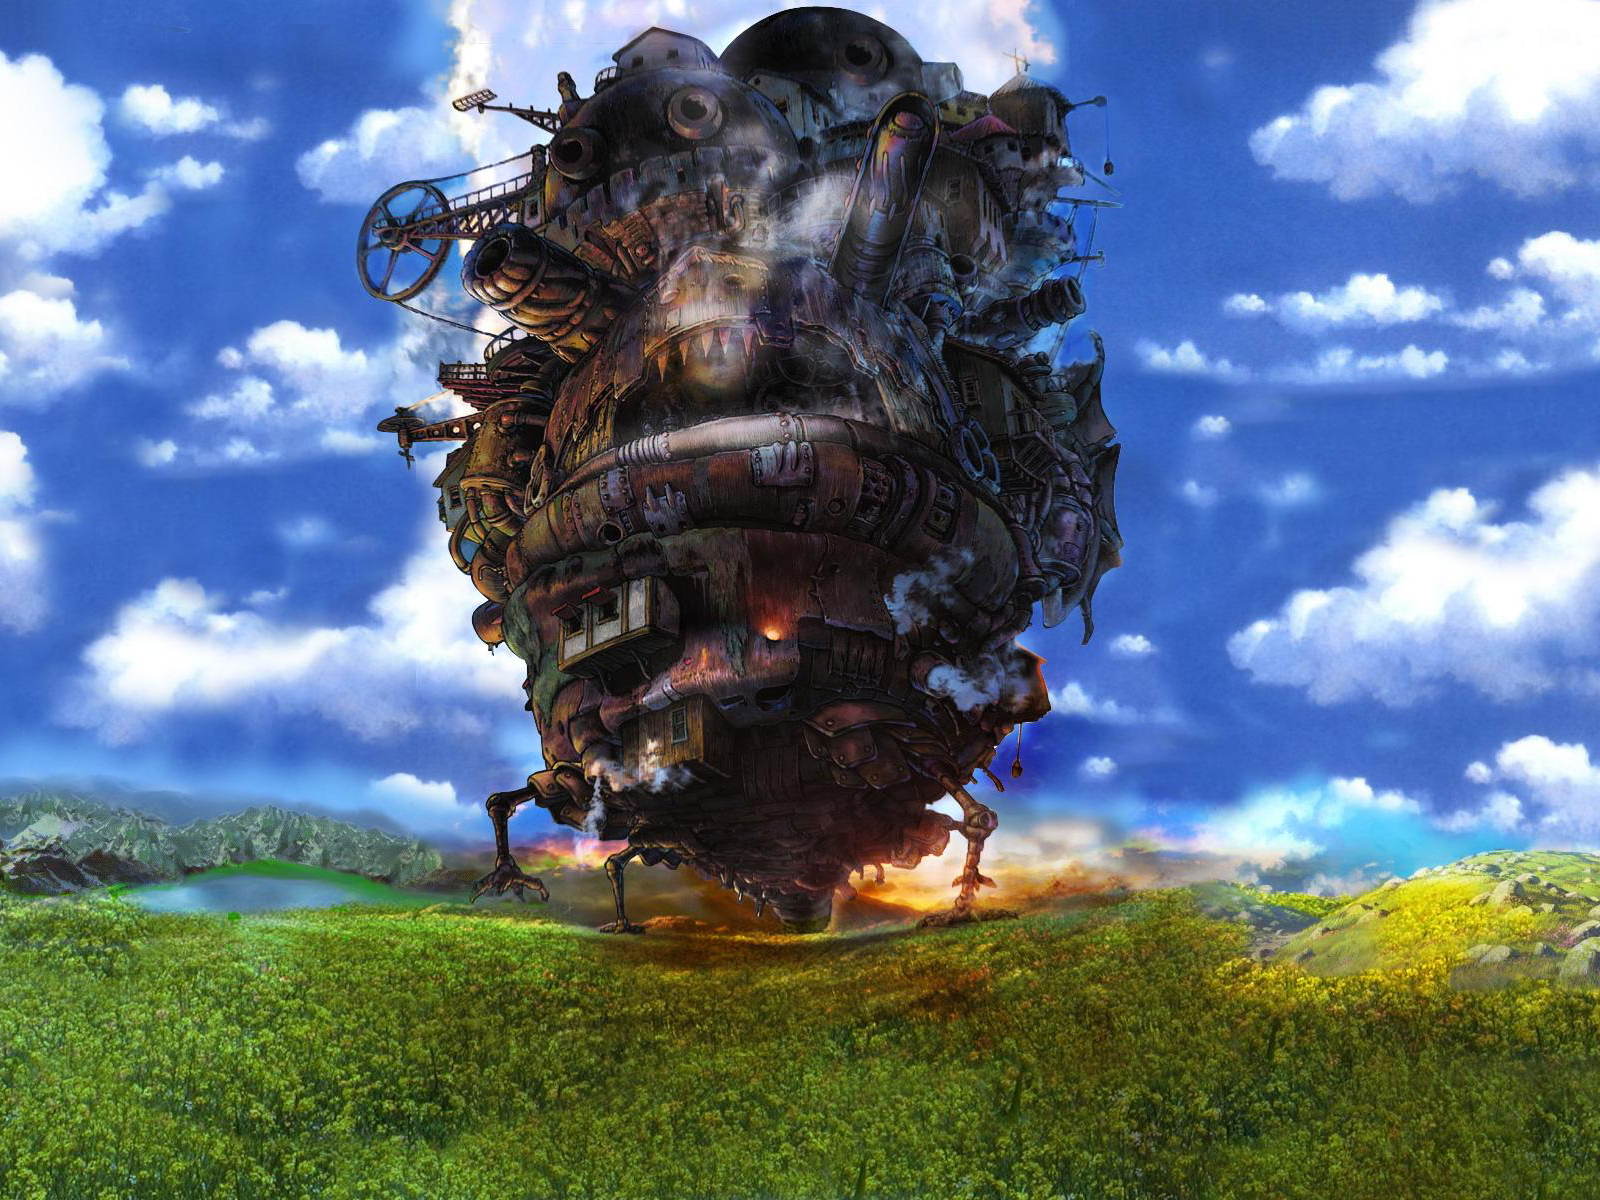 Studio Ghibli Wallpaper - Howl's Moving Castle - HD Wallpaper 